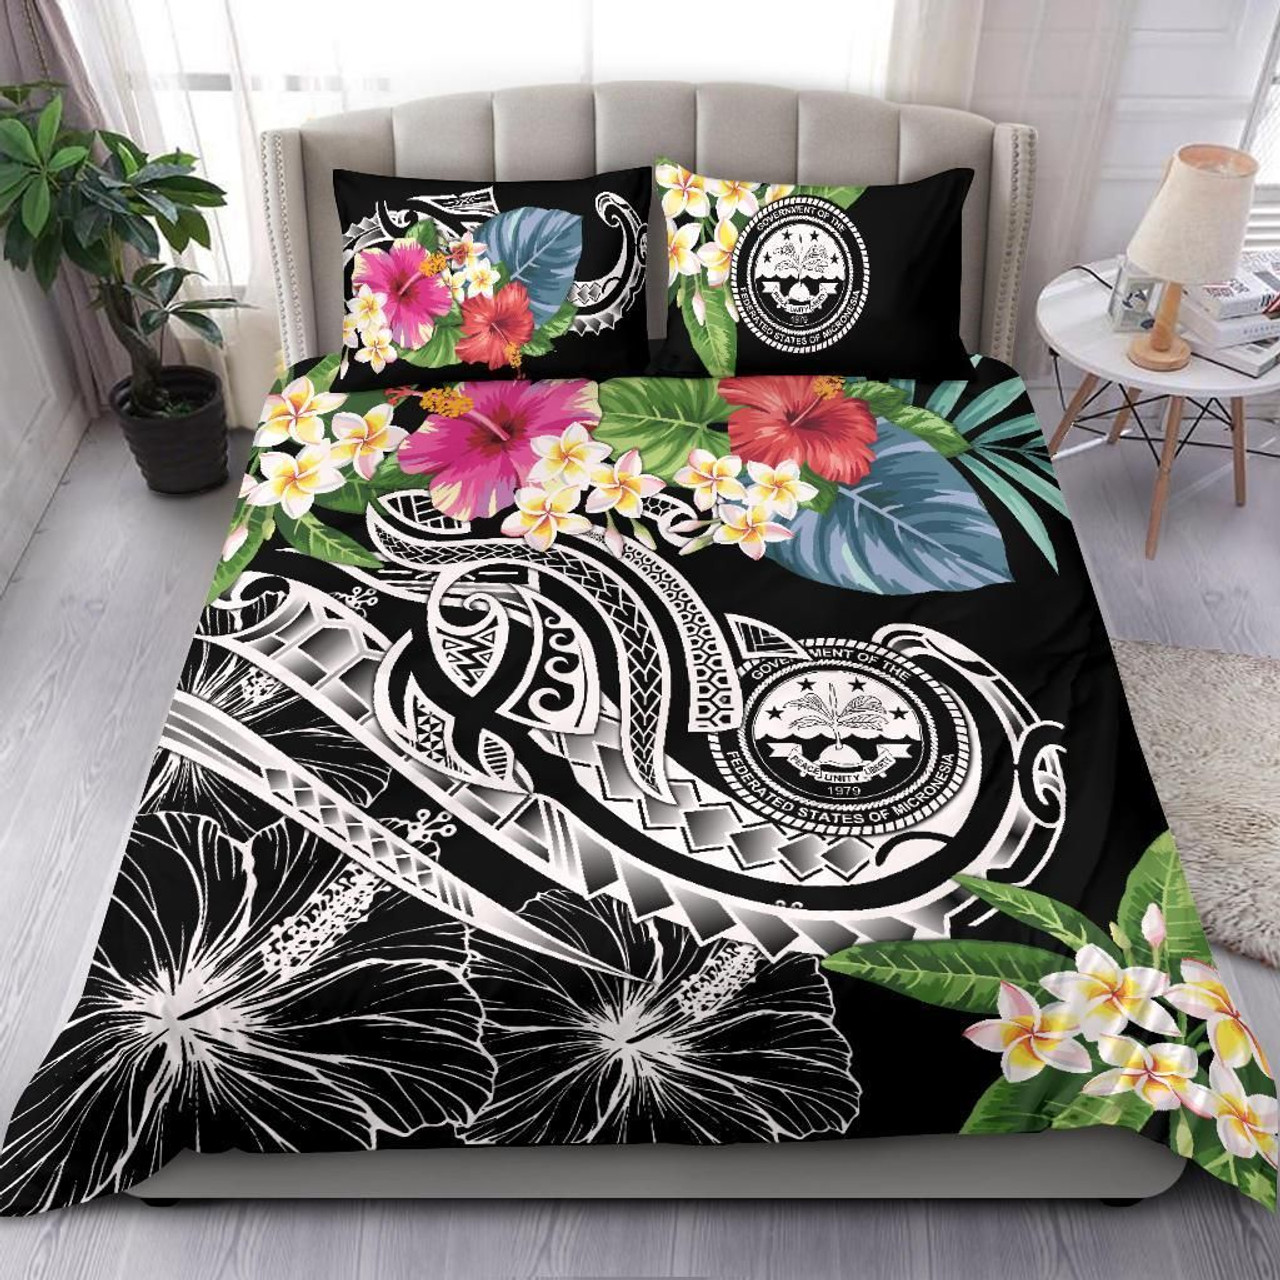 FSM Polynesian Bedding Set - Summer Plumeria (Black) 1